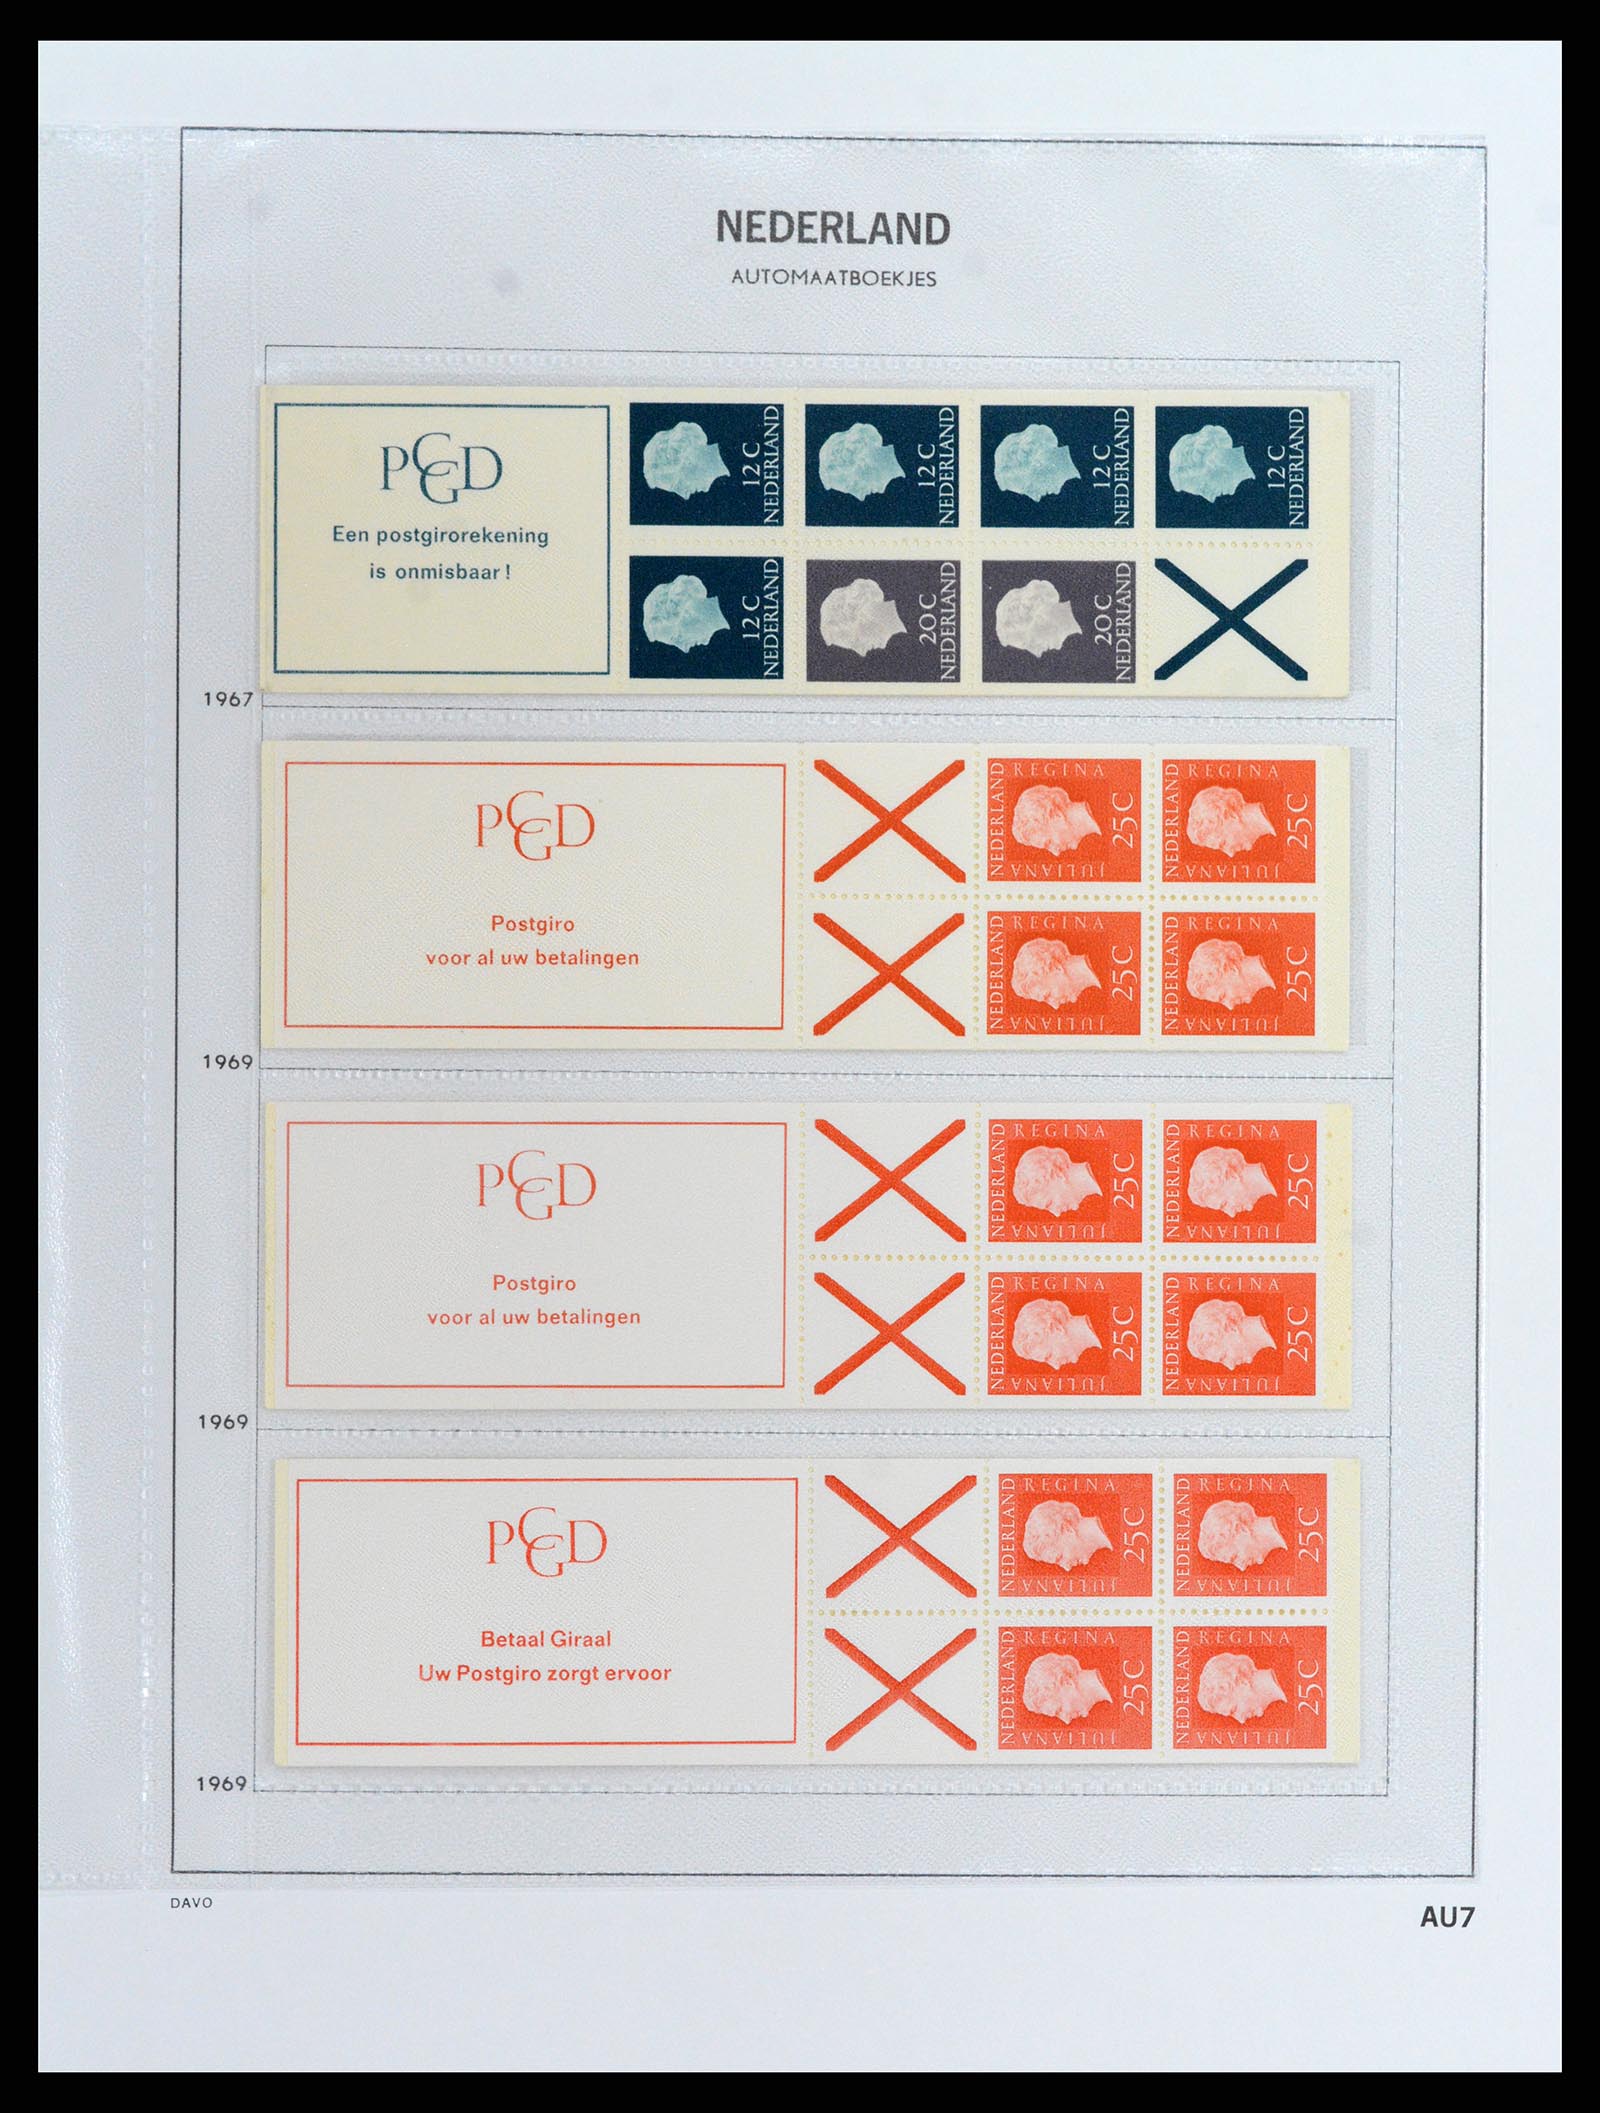 37871 007 - Postzegelverzameling 37871 Nederland automaatboekjes 1964-2000.